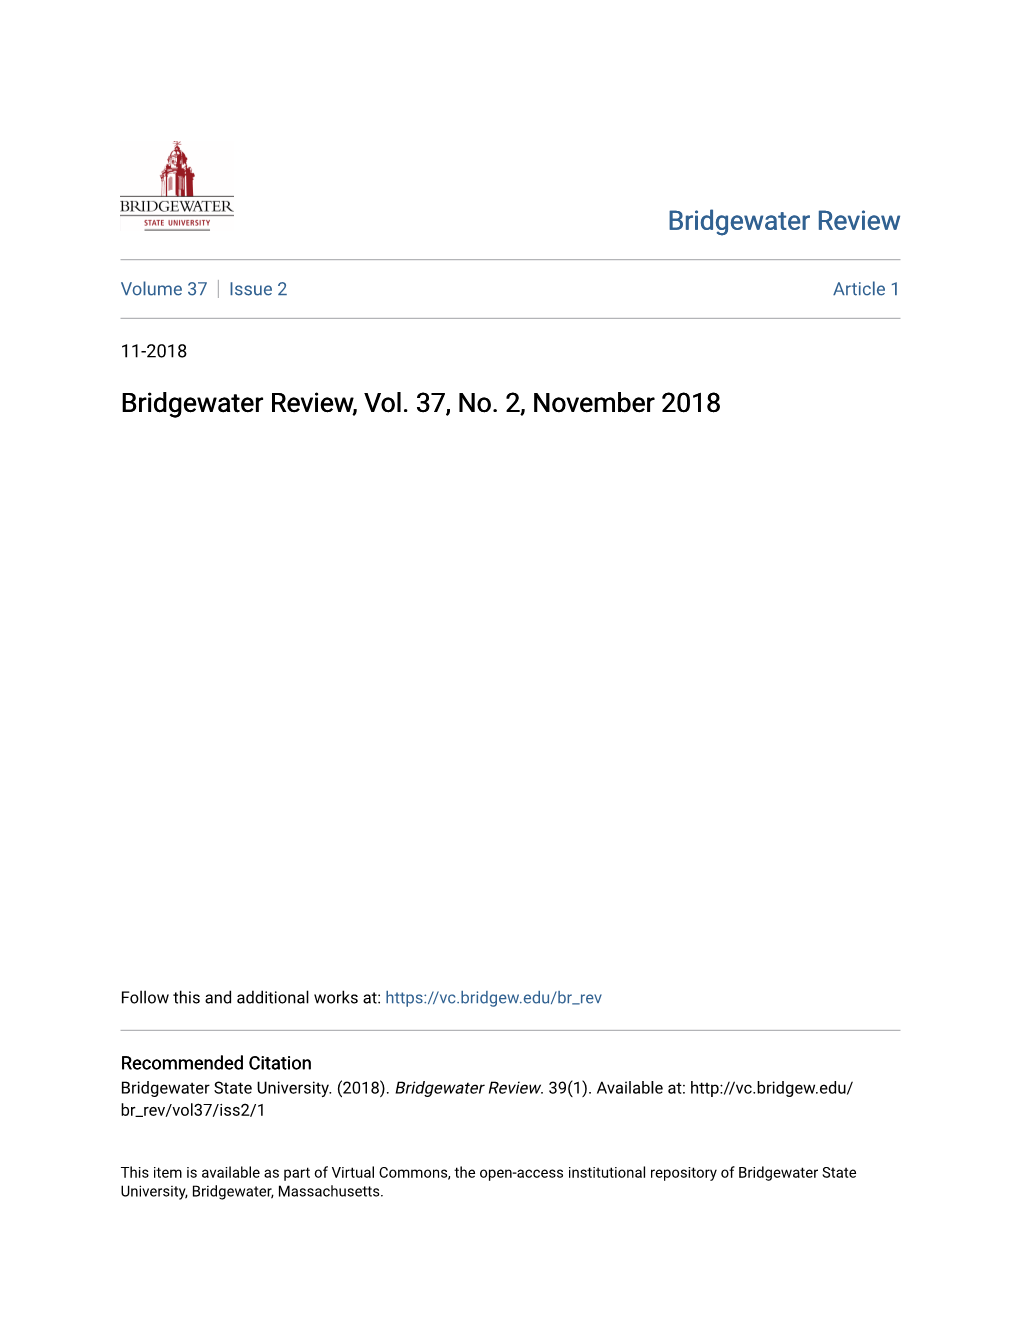 Bridgewater Review, Vol. 37, No. 2, November 2018